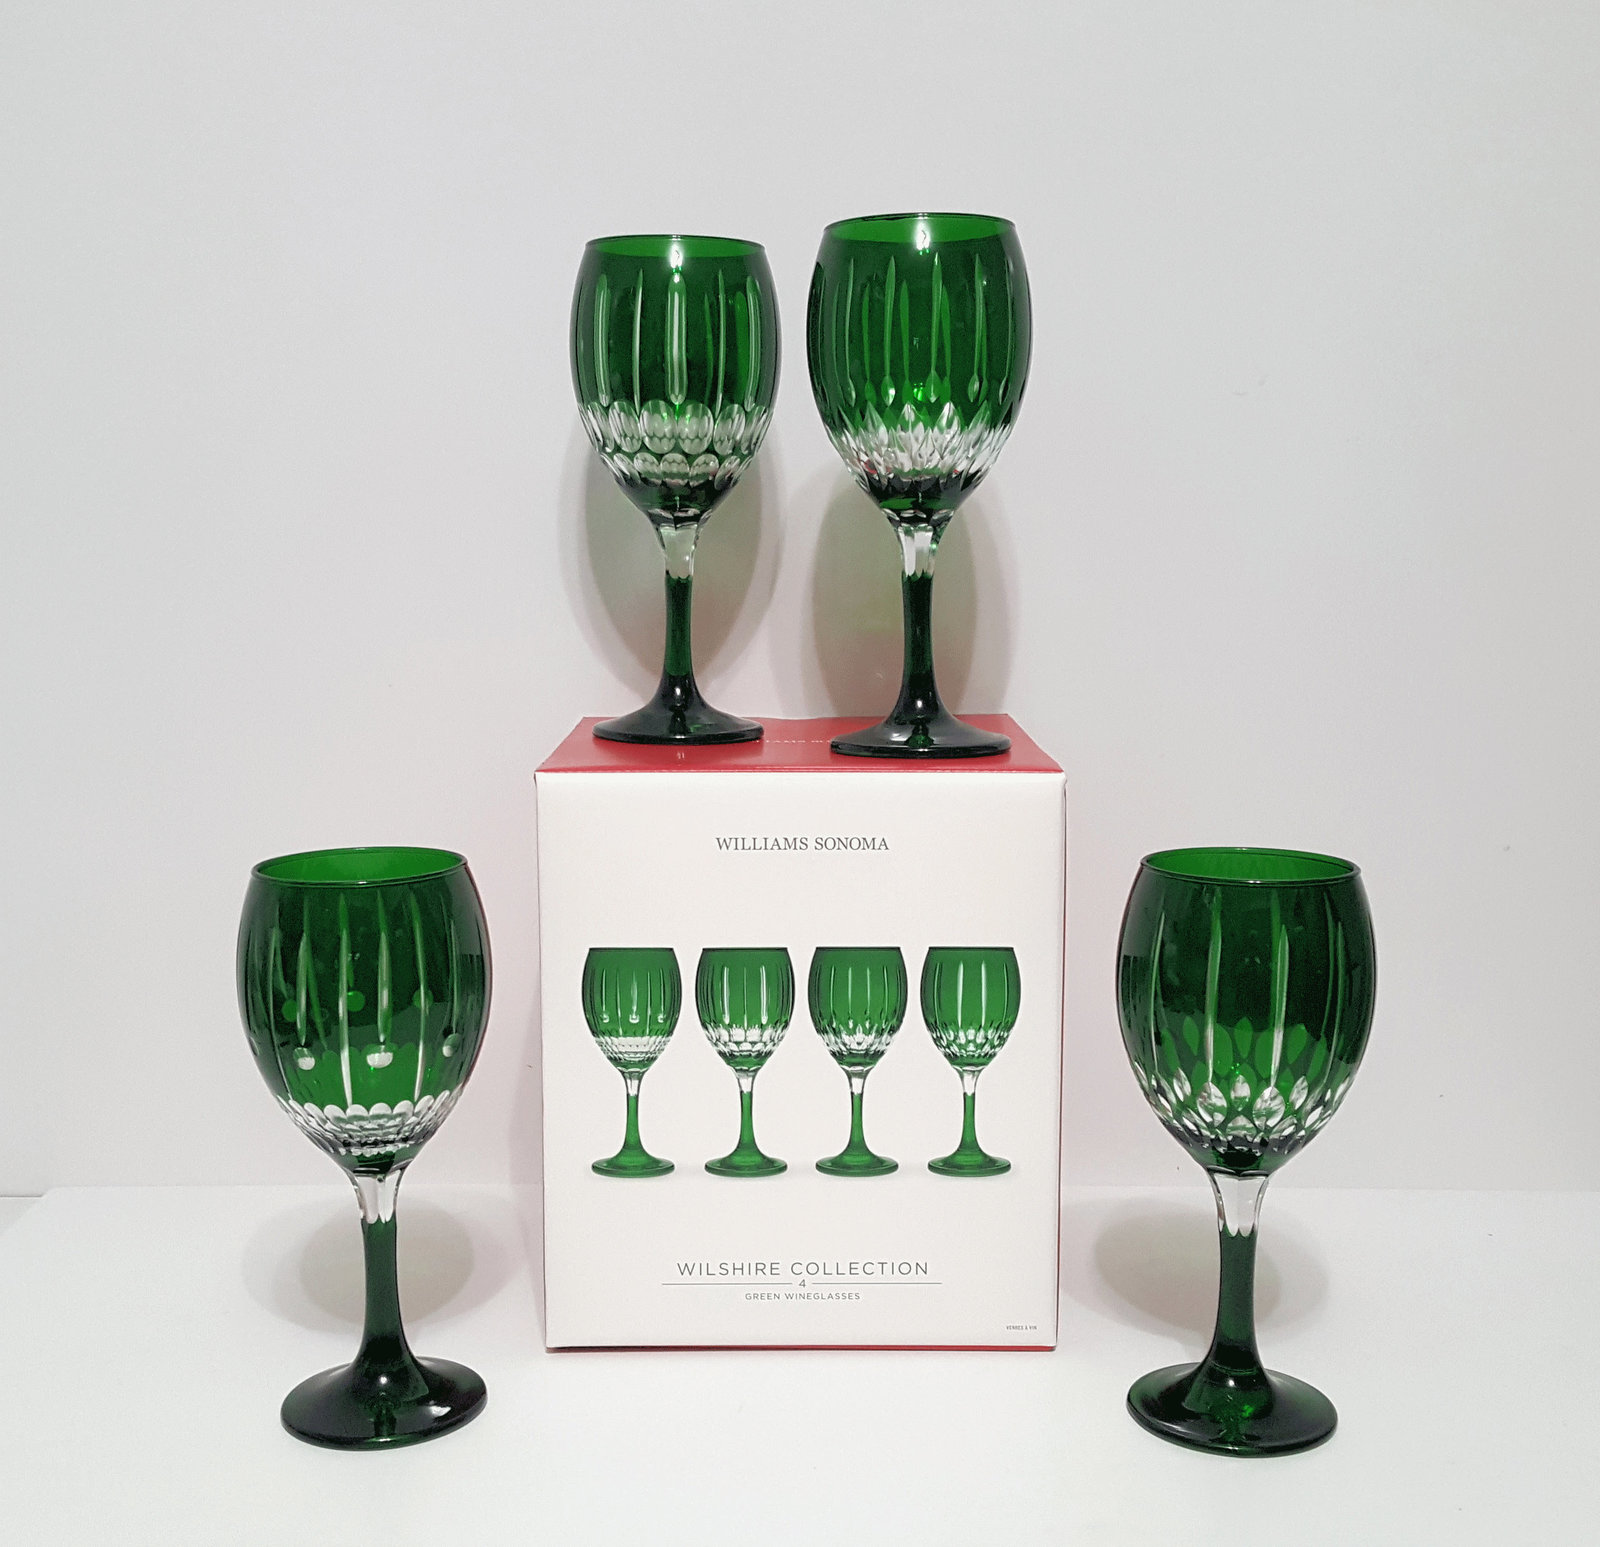 NEW Williams Sonoma Set of 4 GREEN Wilshire Jewel Cut Mixed Wine Glasses 15 OZ - $229.99